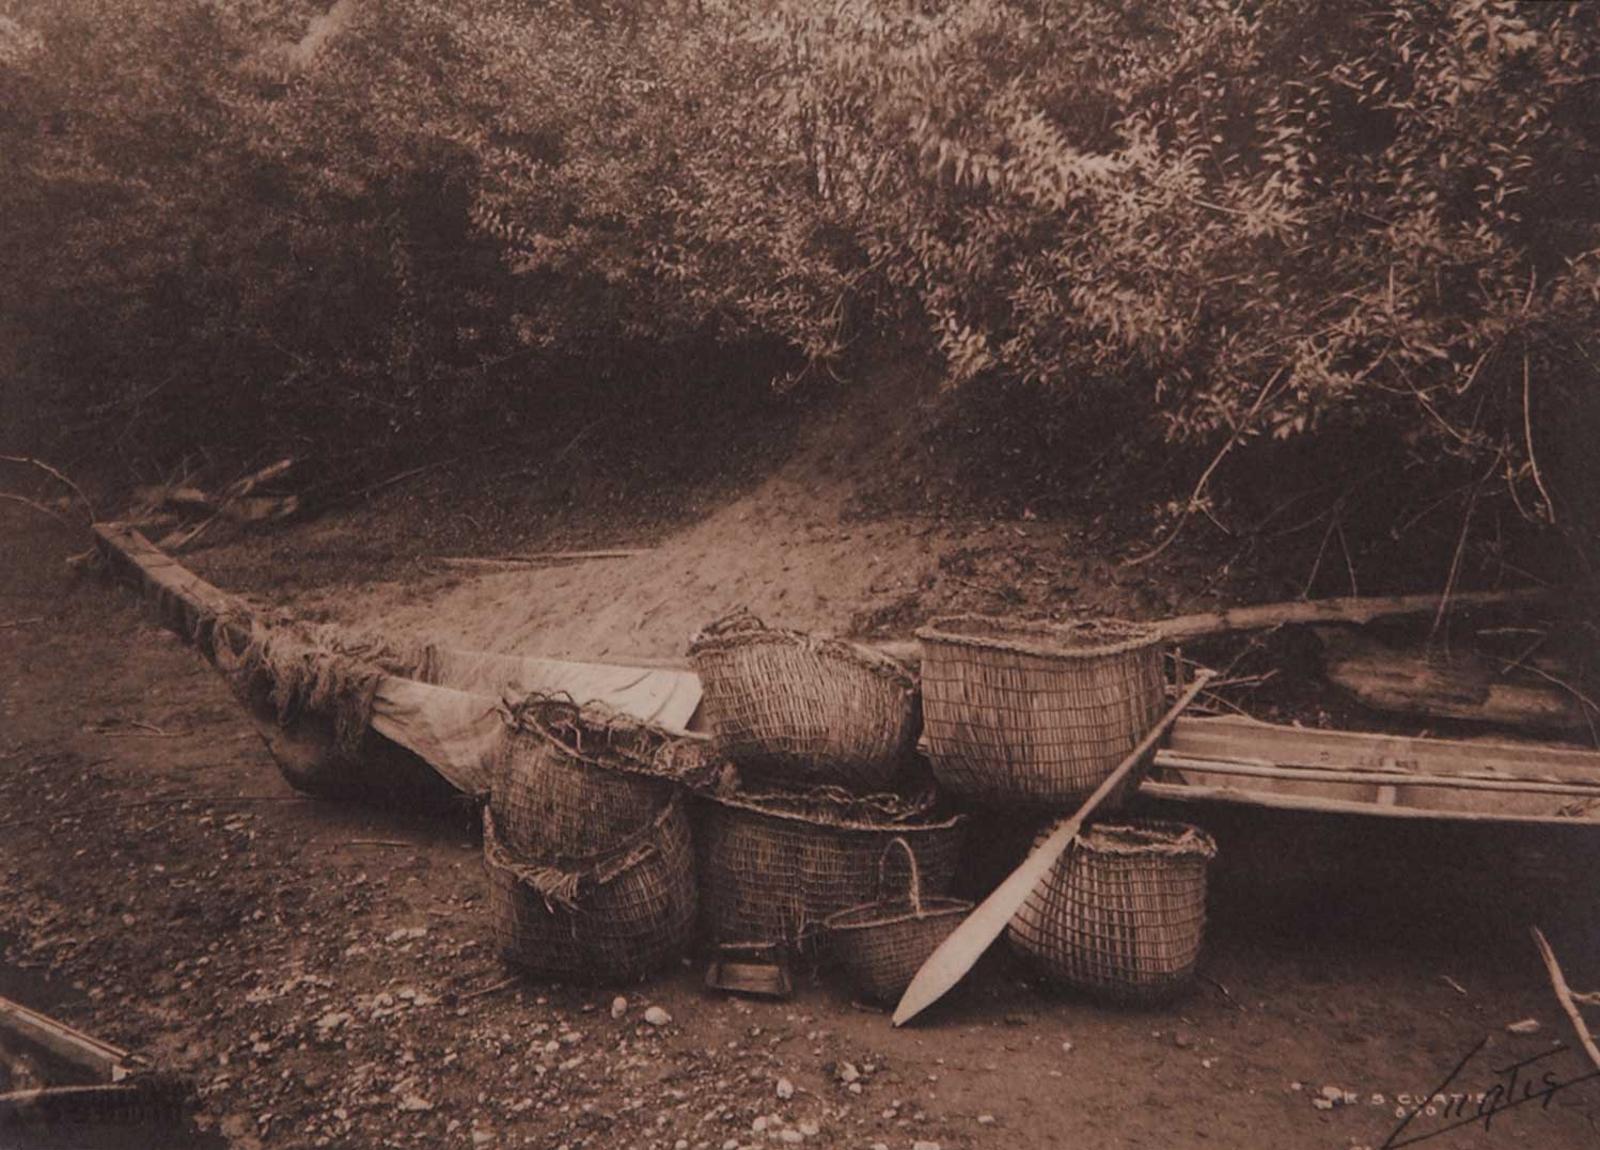 Edward Sherrif Curtis (1868-1952) - Untitled - Dugout Canoe with Baskets and Paddle